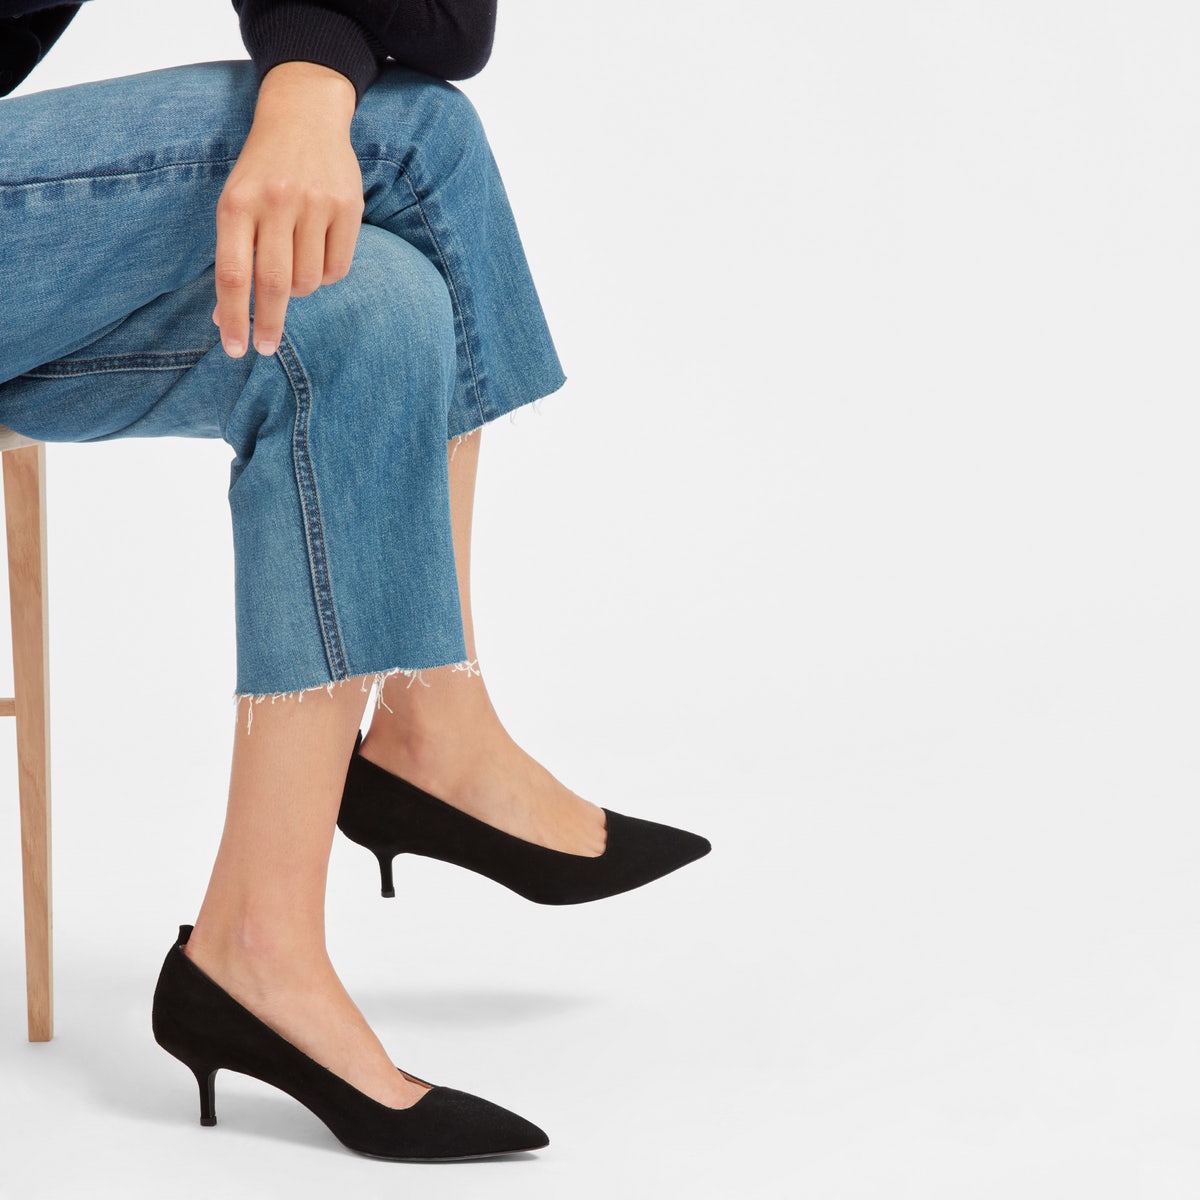 Everlane editor heels in black, as shown on a model's feet.